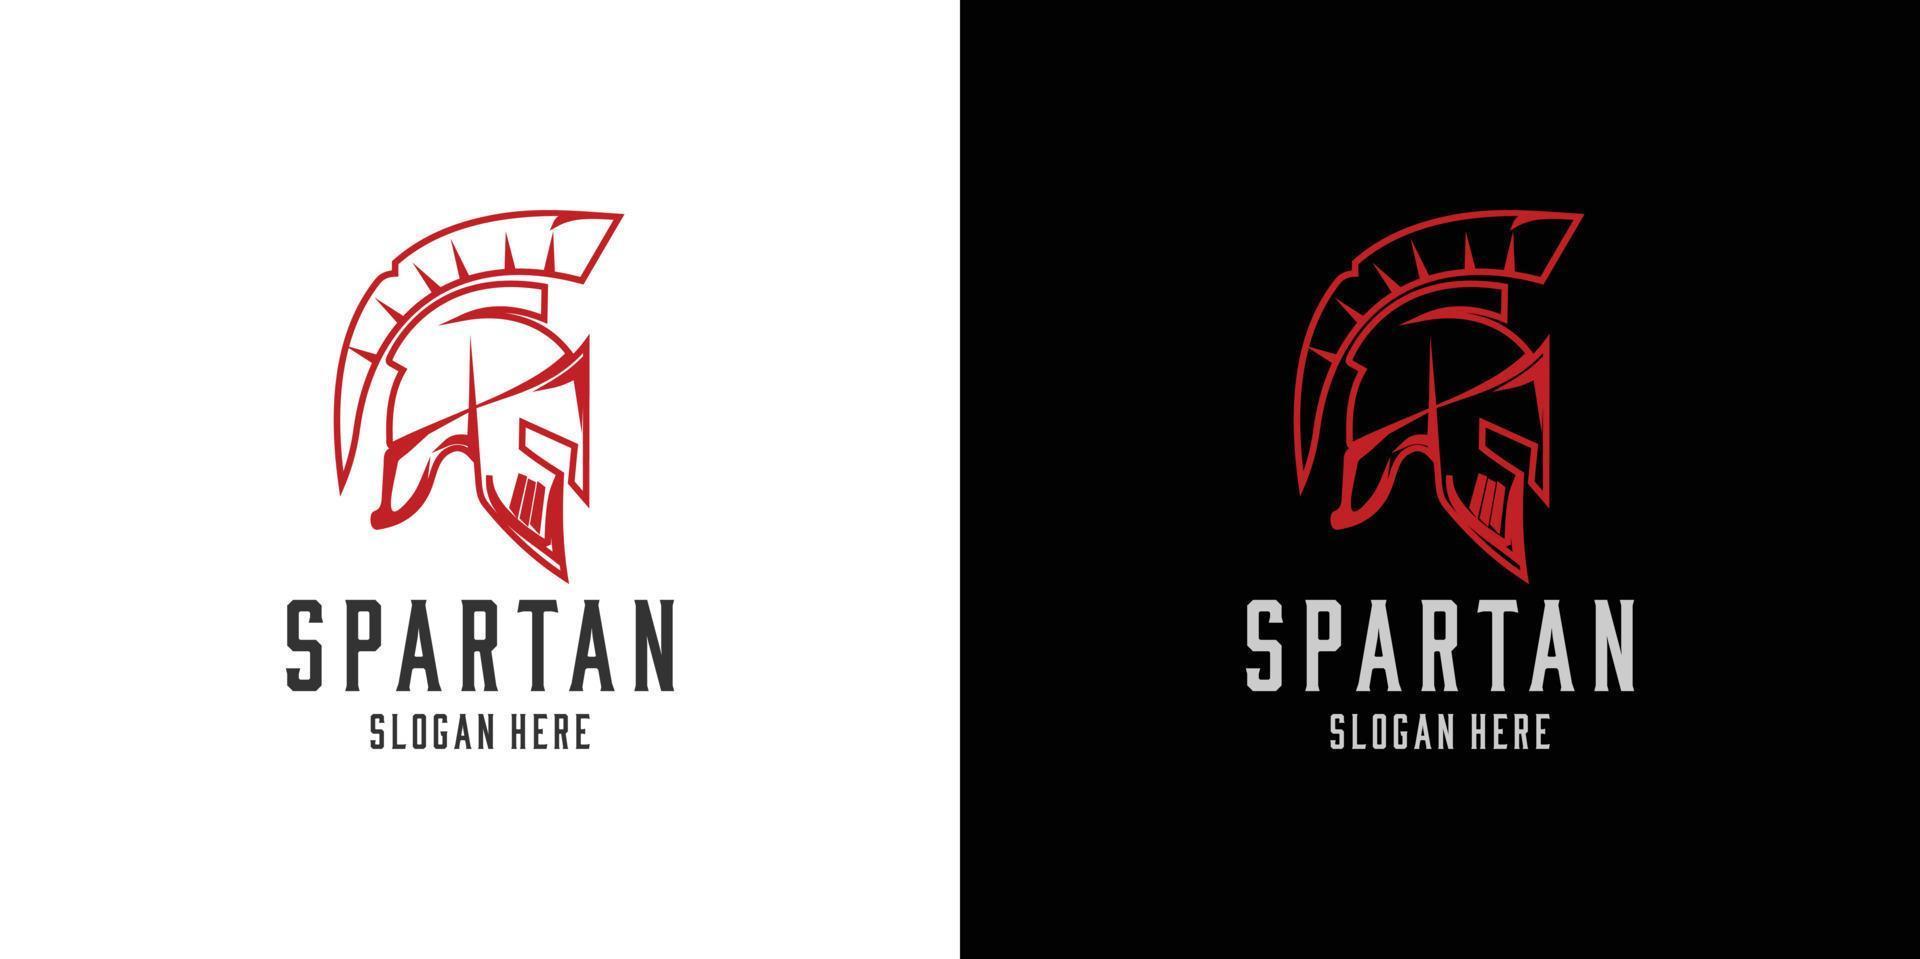 logotipo espartano definido em estilo linear e minimalista vetor